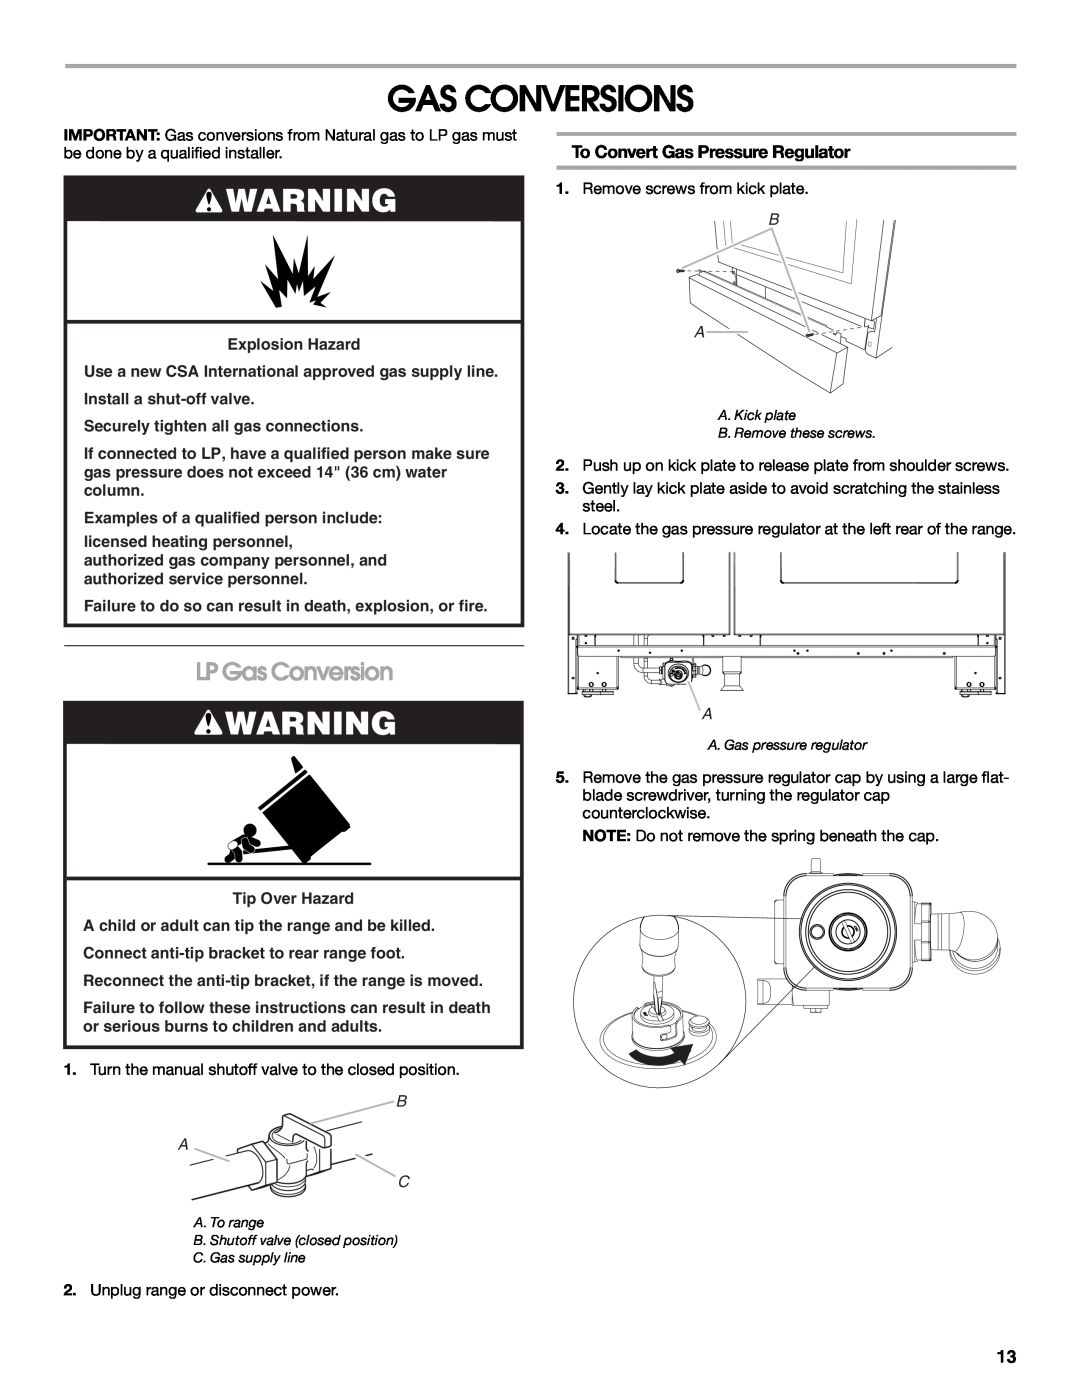 Jenn-Air W10394575A installation instructions Gas Conversions, LP Gas Conversion, To Convert Gas Pressure Regulator, B A C 